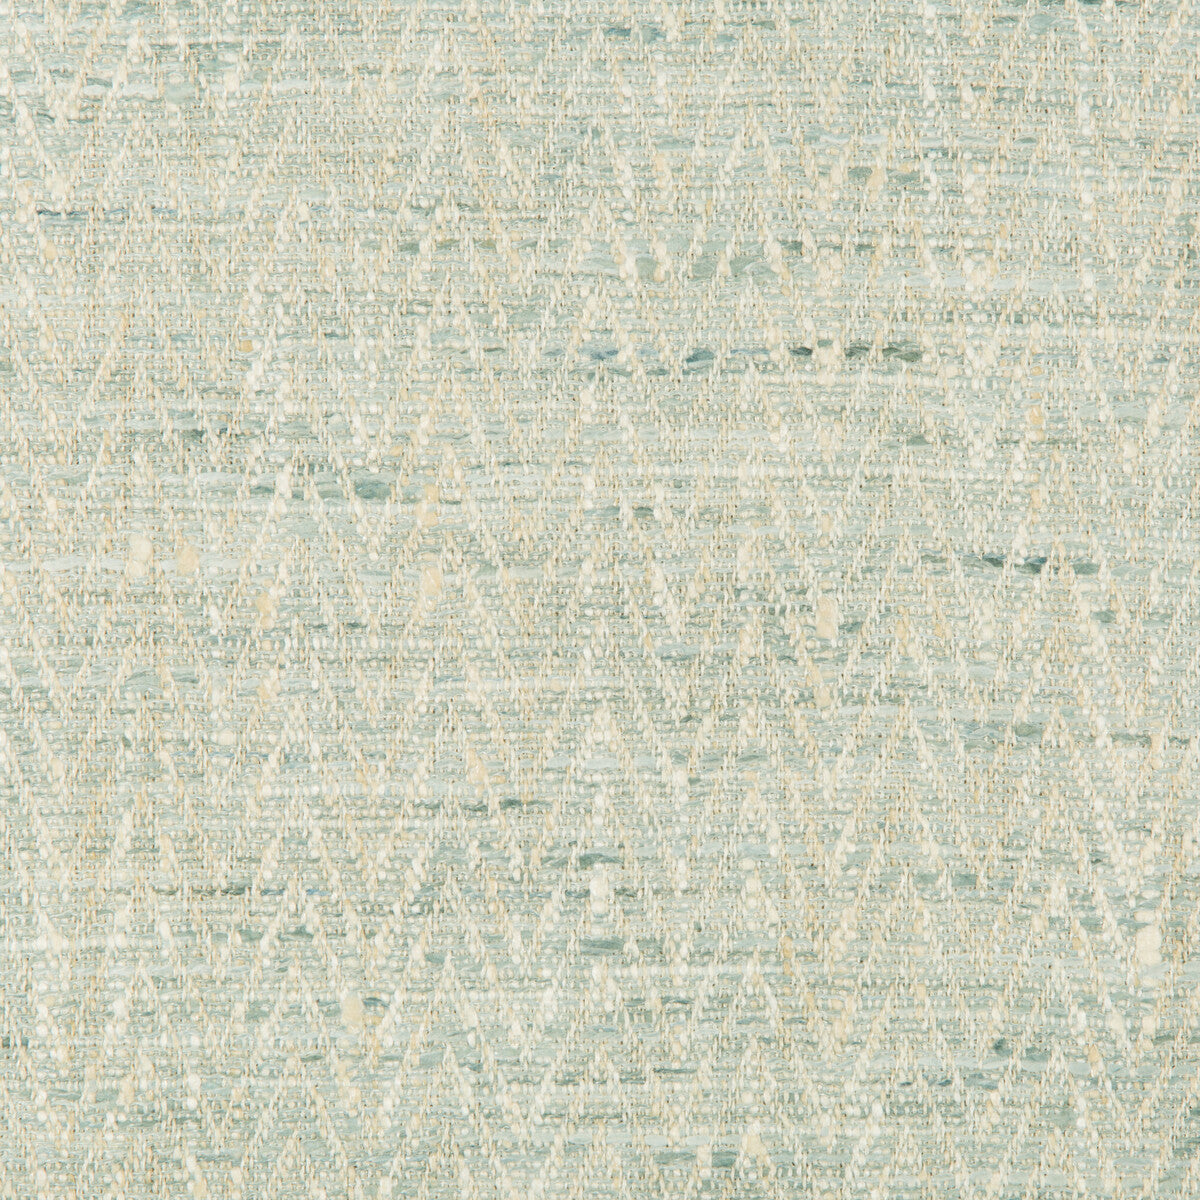 Kravet Smart fabric in 34092-115 color - pattern 34092.115.0 - by Kravet Smart